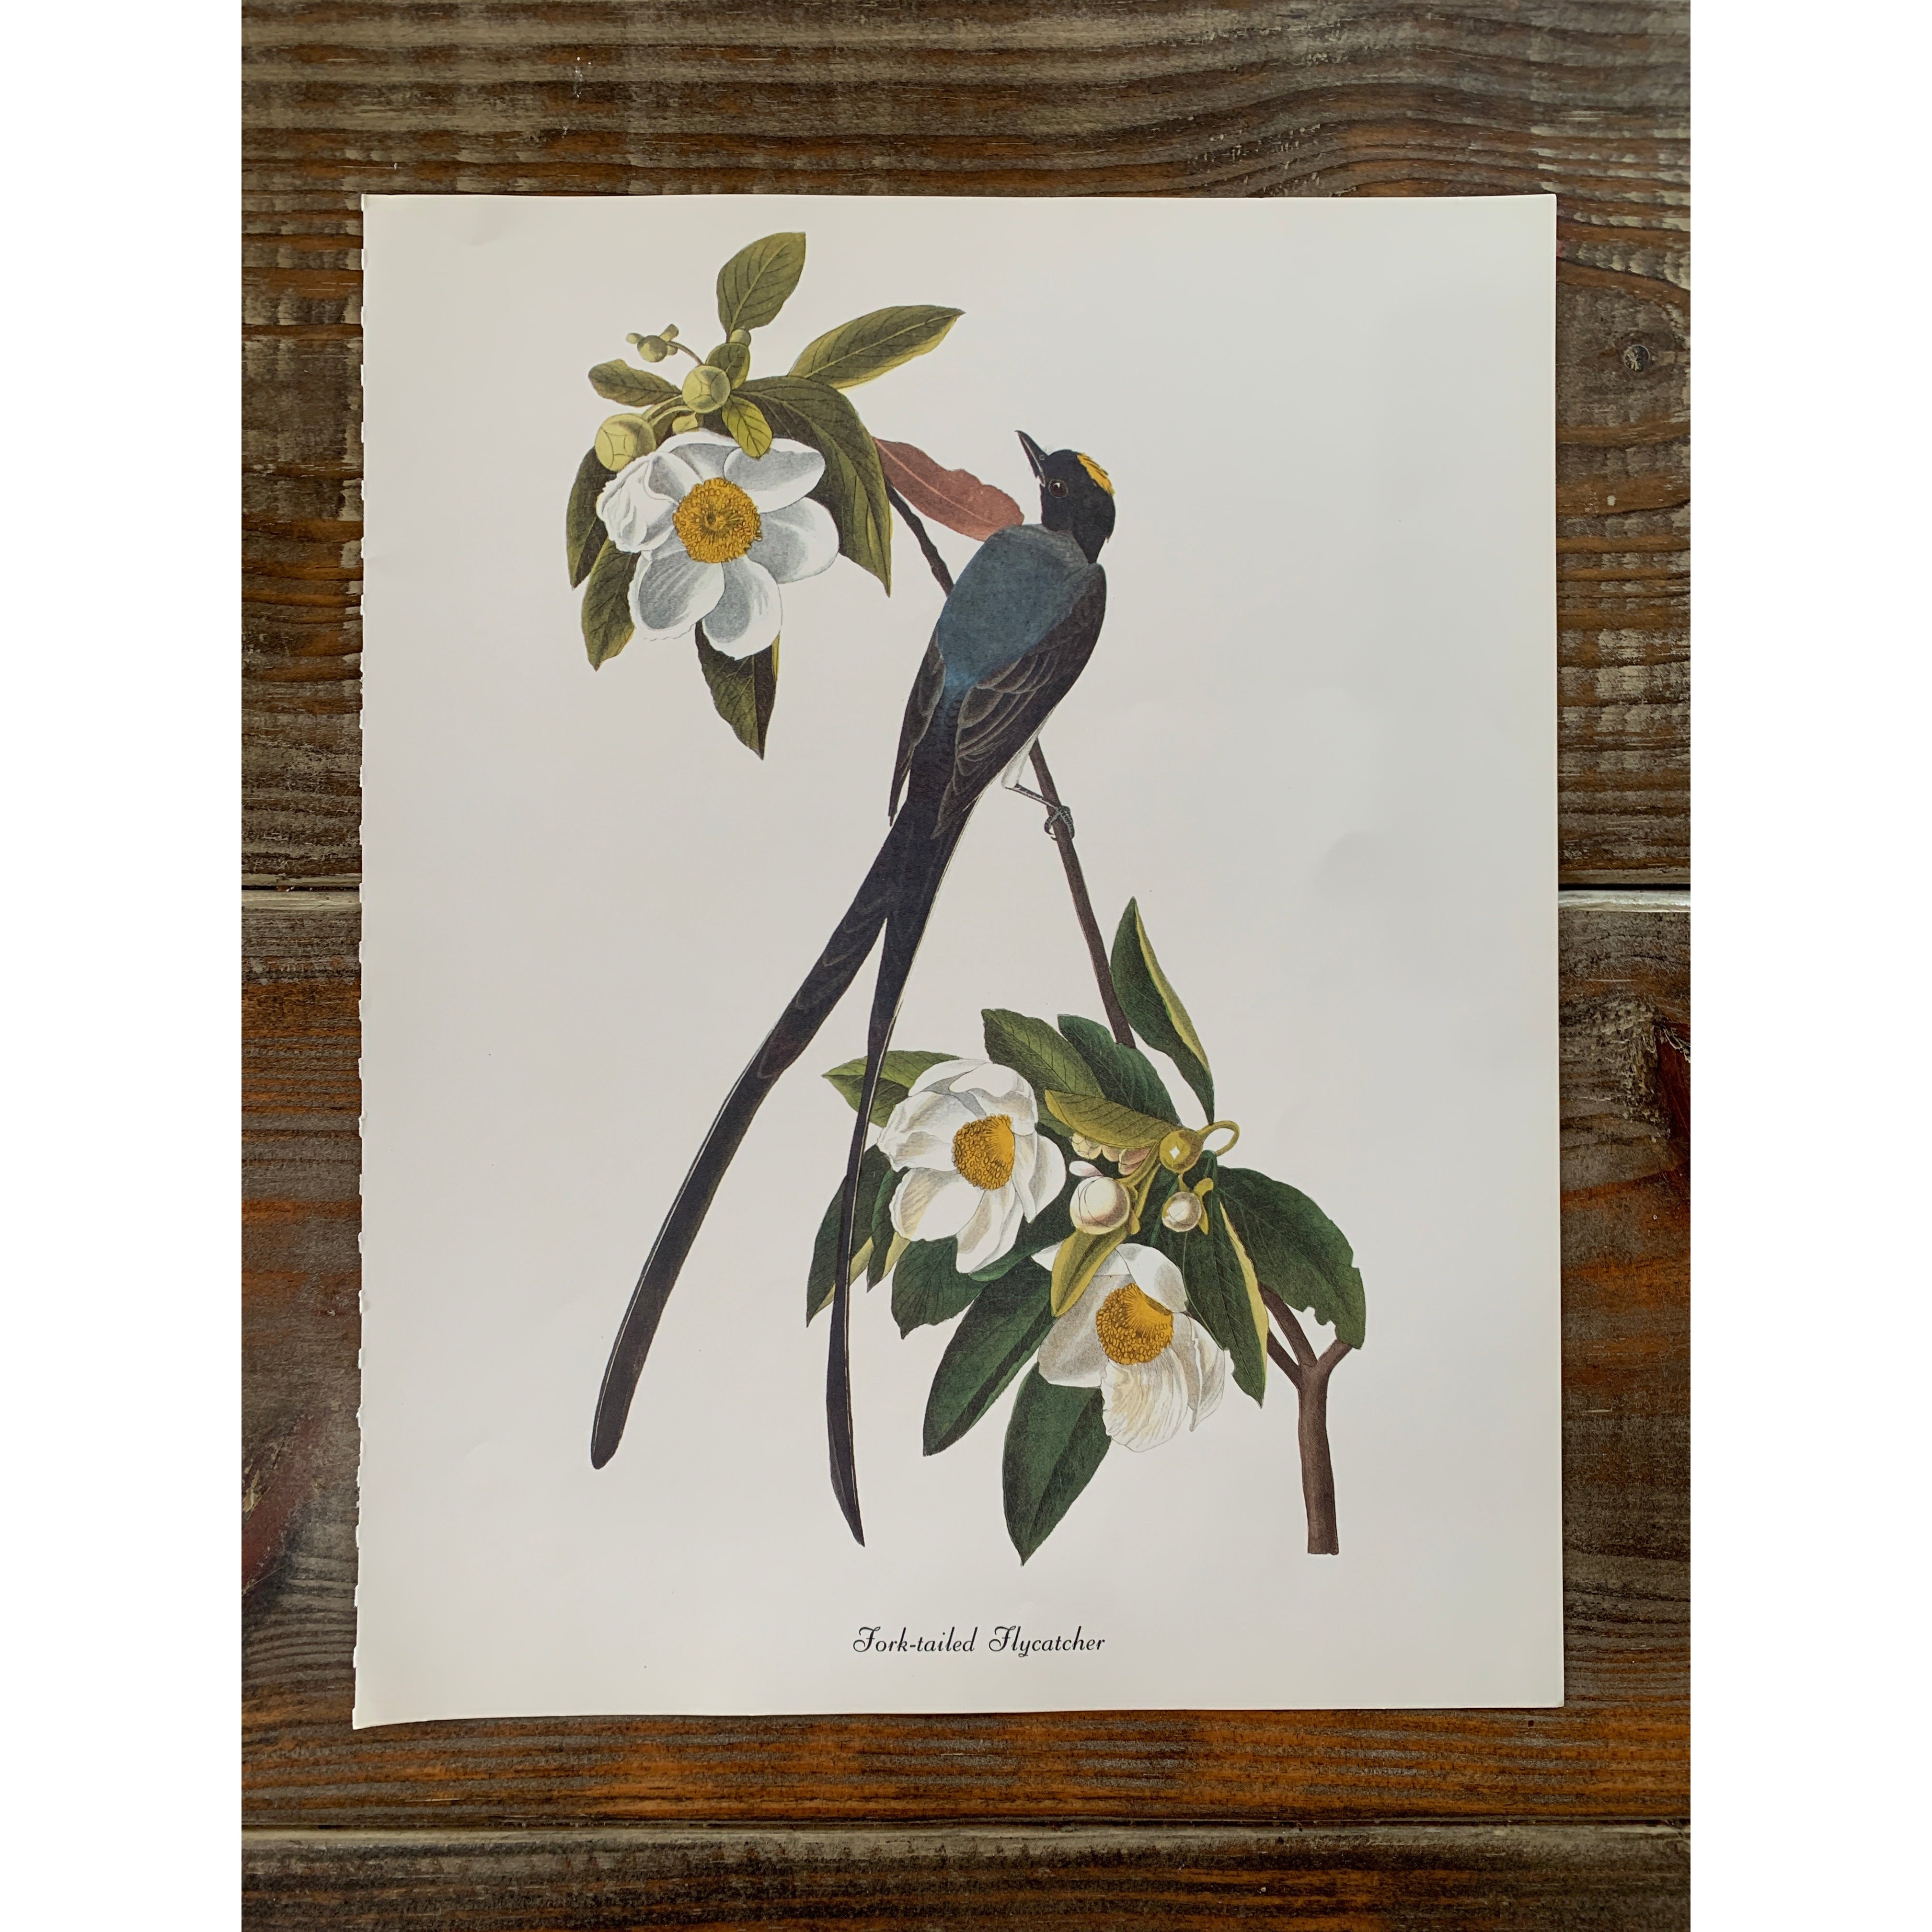 True Vintage Audubon Birds Prints, Authentic Old Book Plates for Frami –  Pretty Old Books